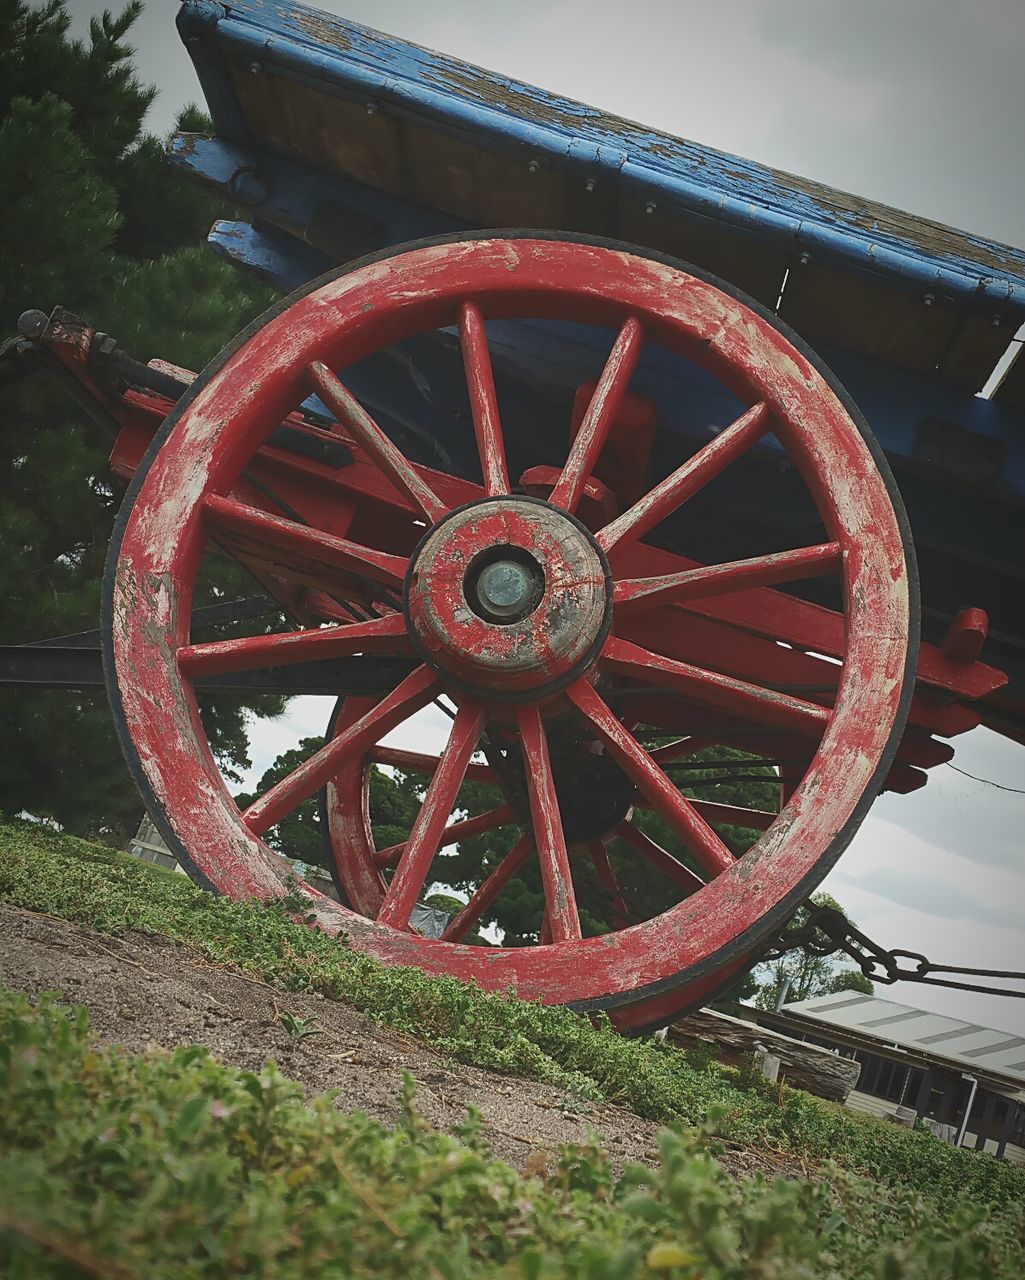 Tilt shot of weathered red wheel cart